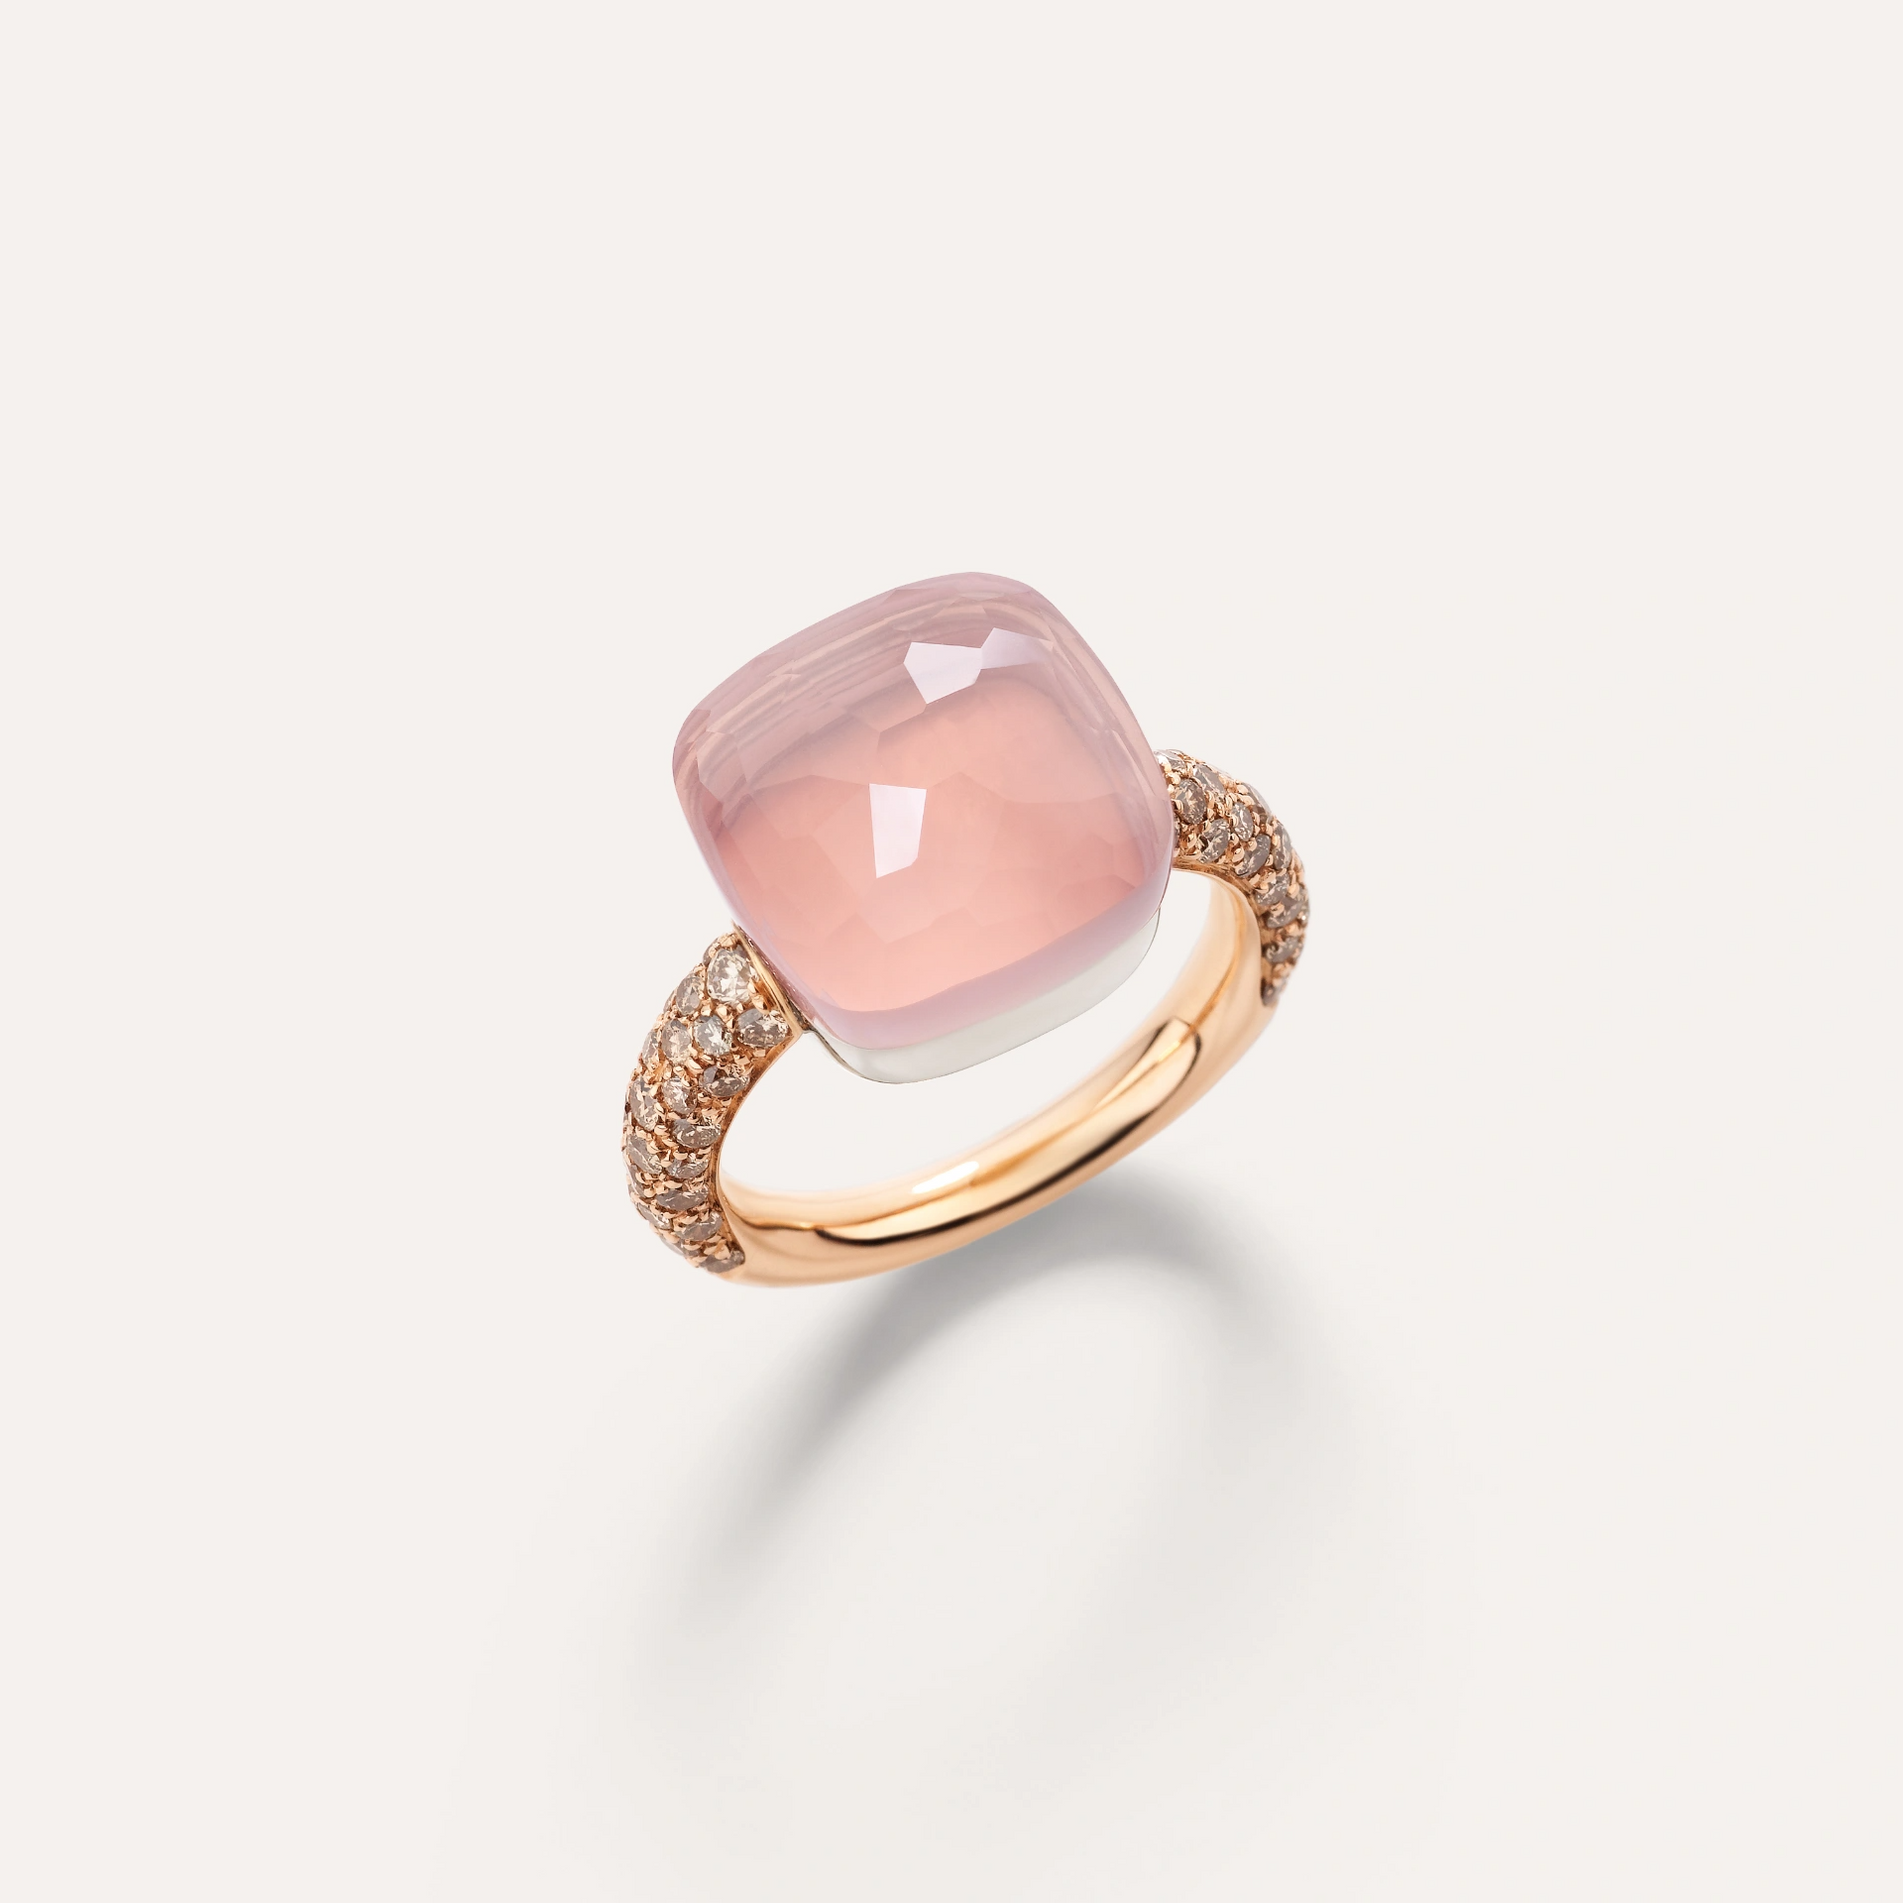 Maxi Nudo Rose quartz ring in 18k rose gold with brown diamonds 